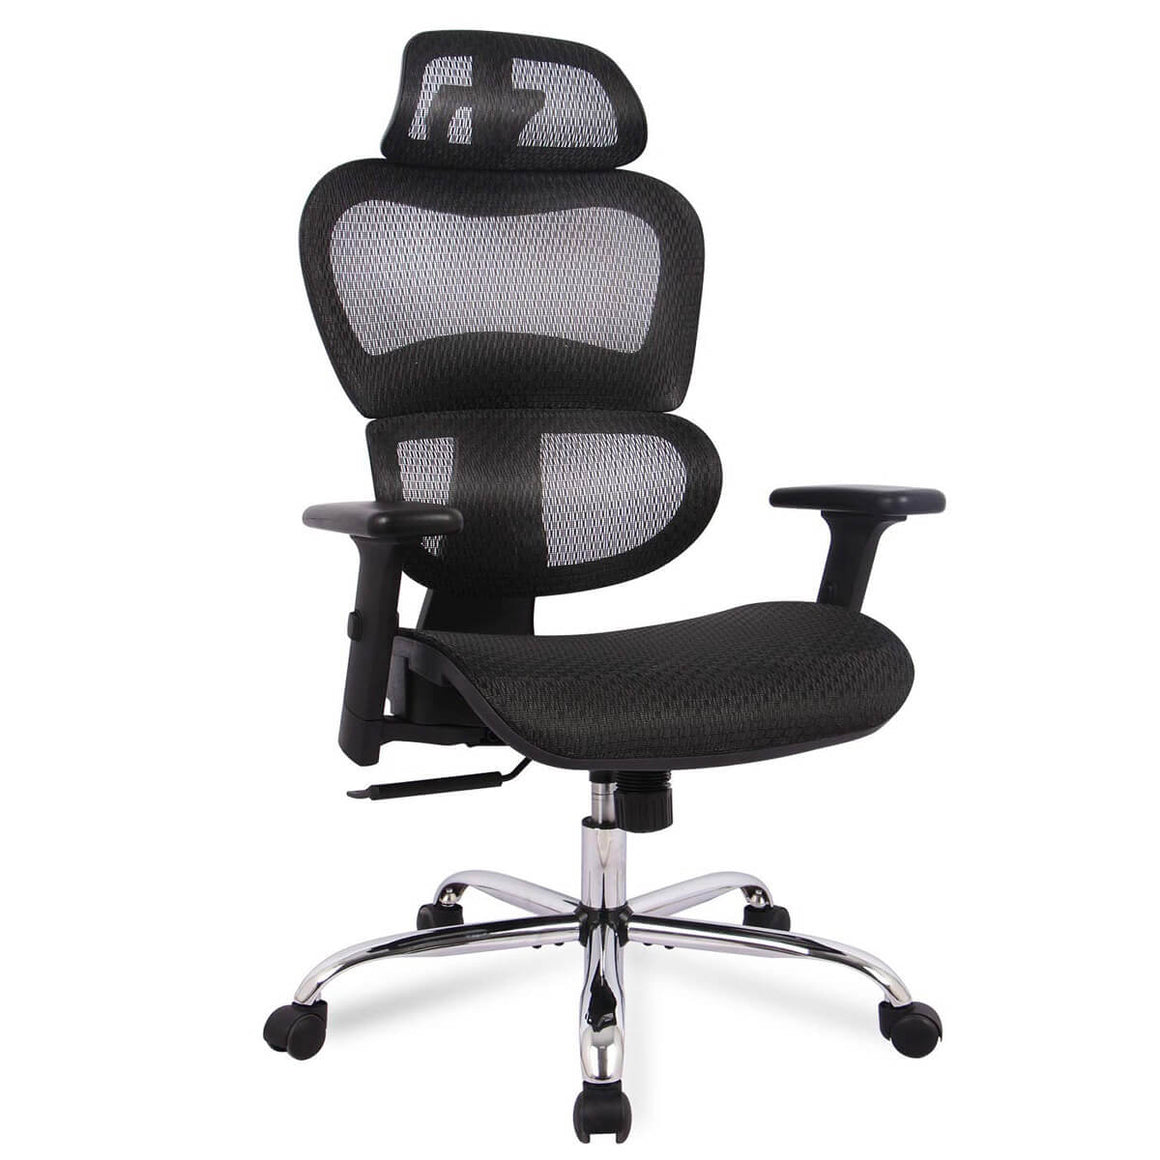 High Back Ergonomic Office Chair With Headrest (Under $300) – Posturion